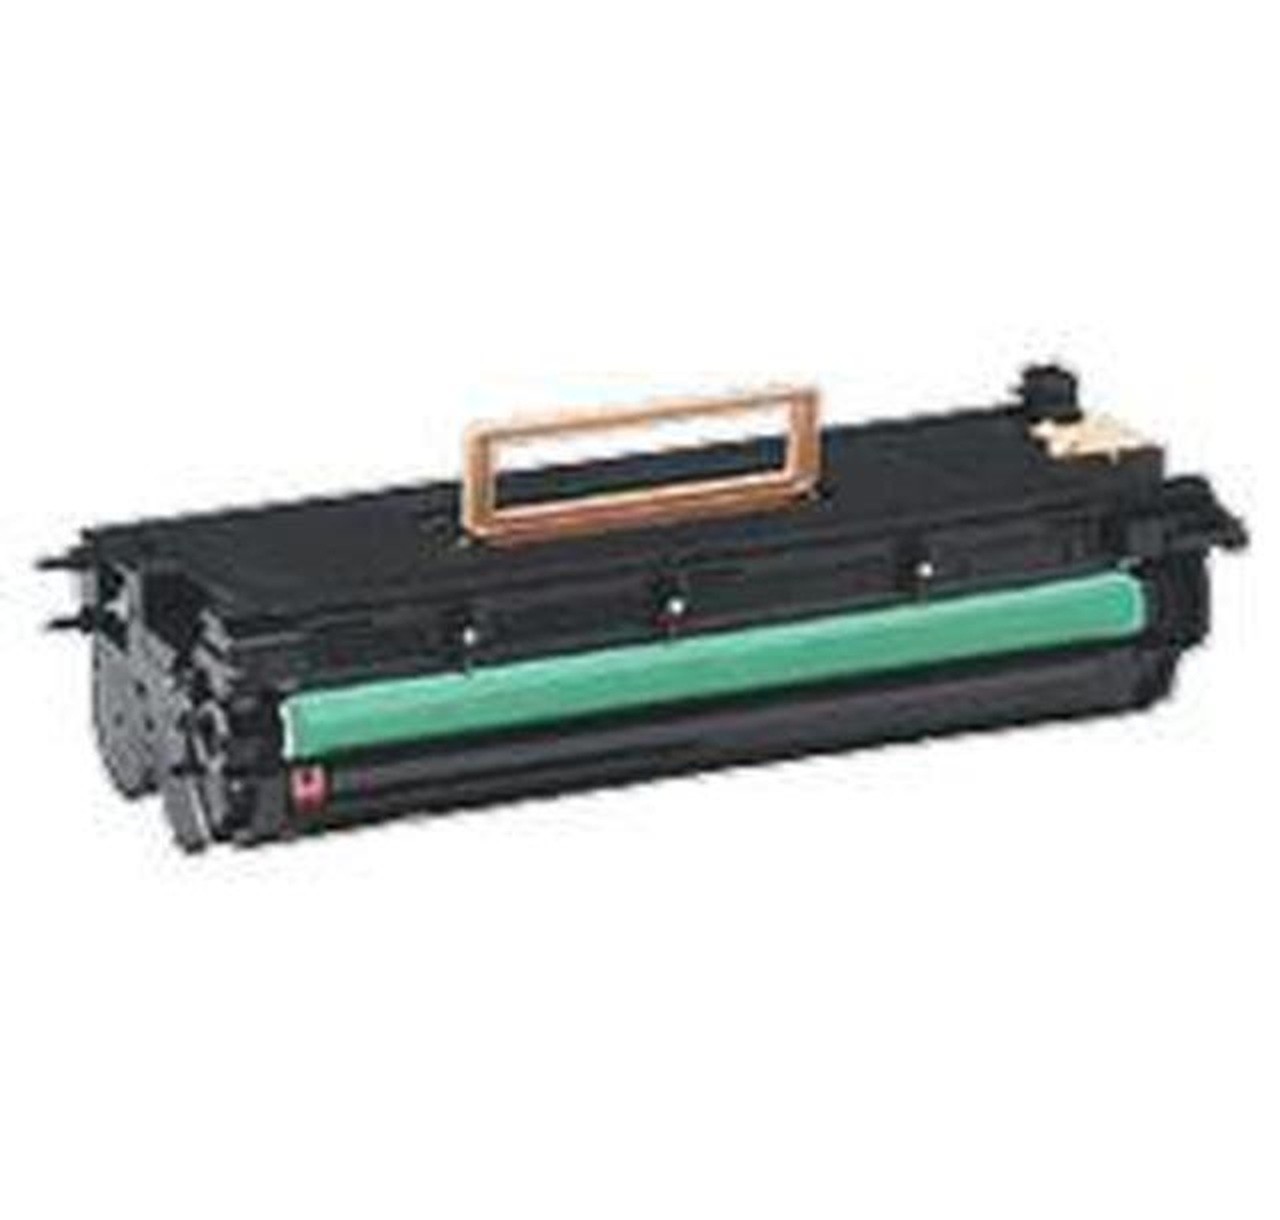 ~Brand New Original Xerox 113R313 Laser Toner Cartridge